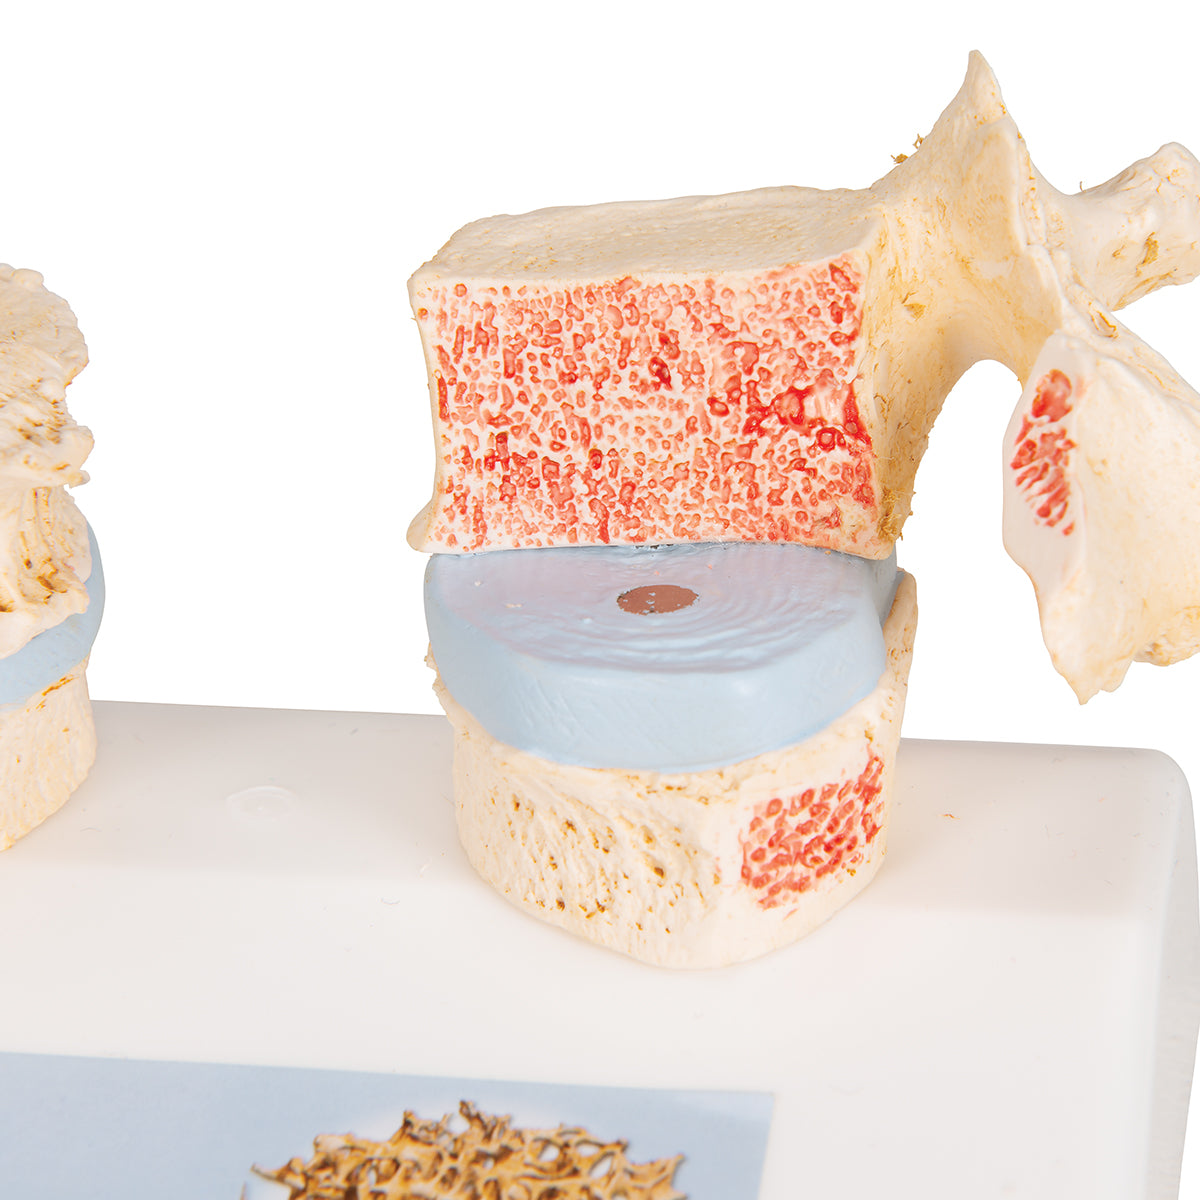 Anatomical model of vertebrae illustrating osteoporosis vs healthy bone tissue